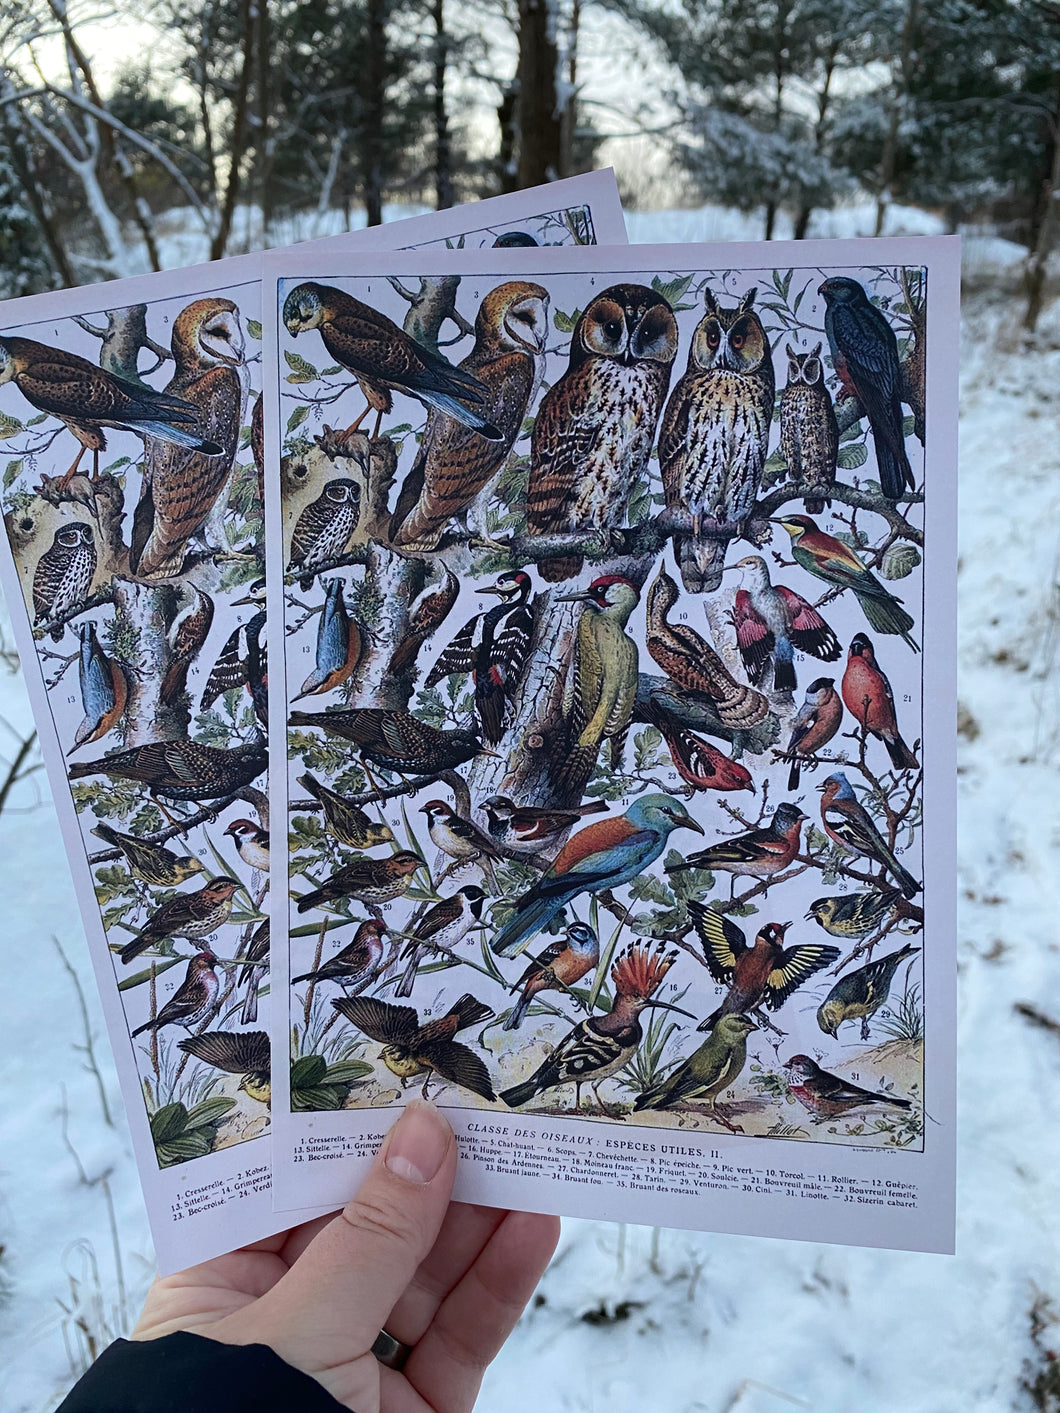 Oiseaux by Millot letter sheets